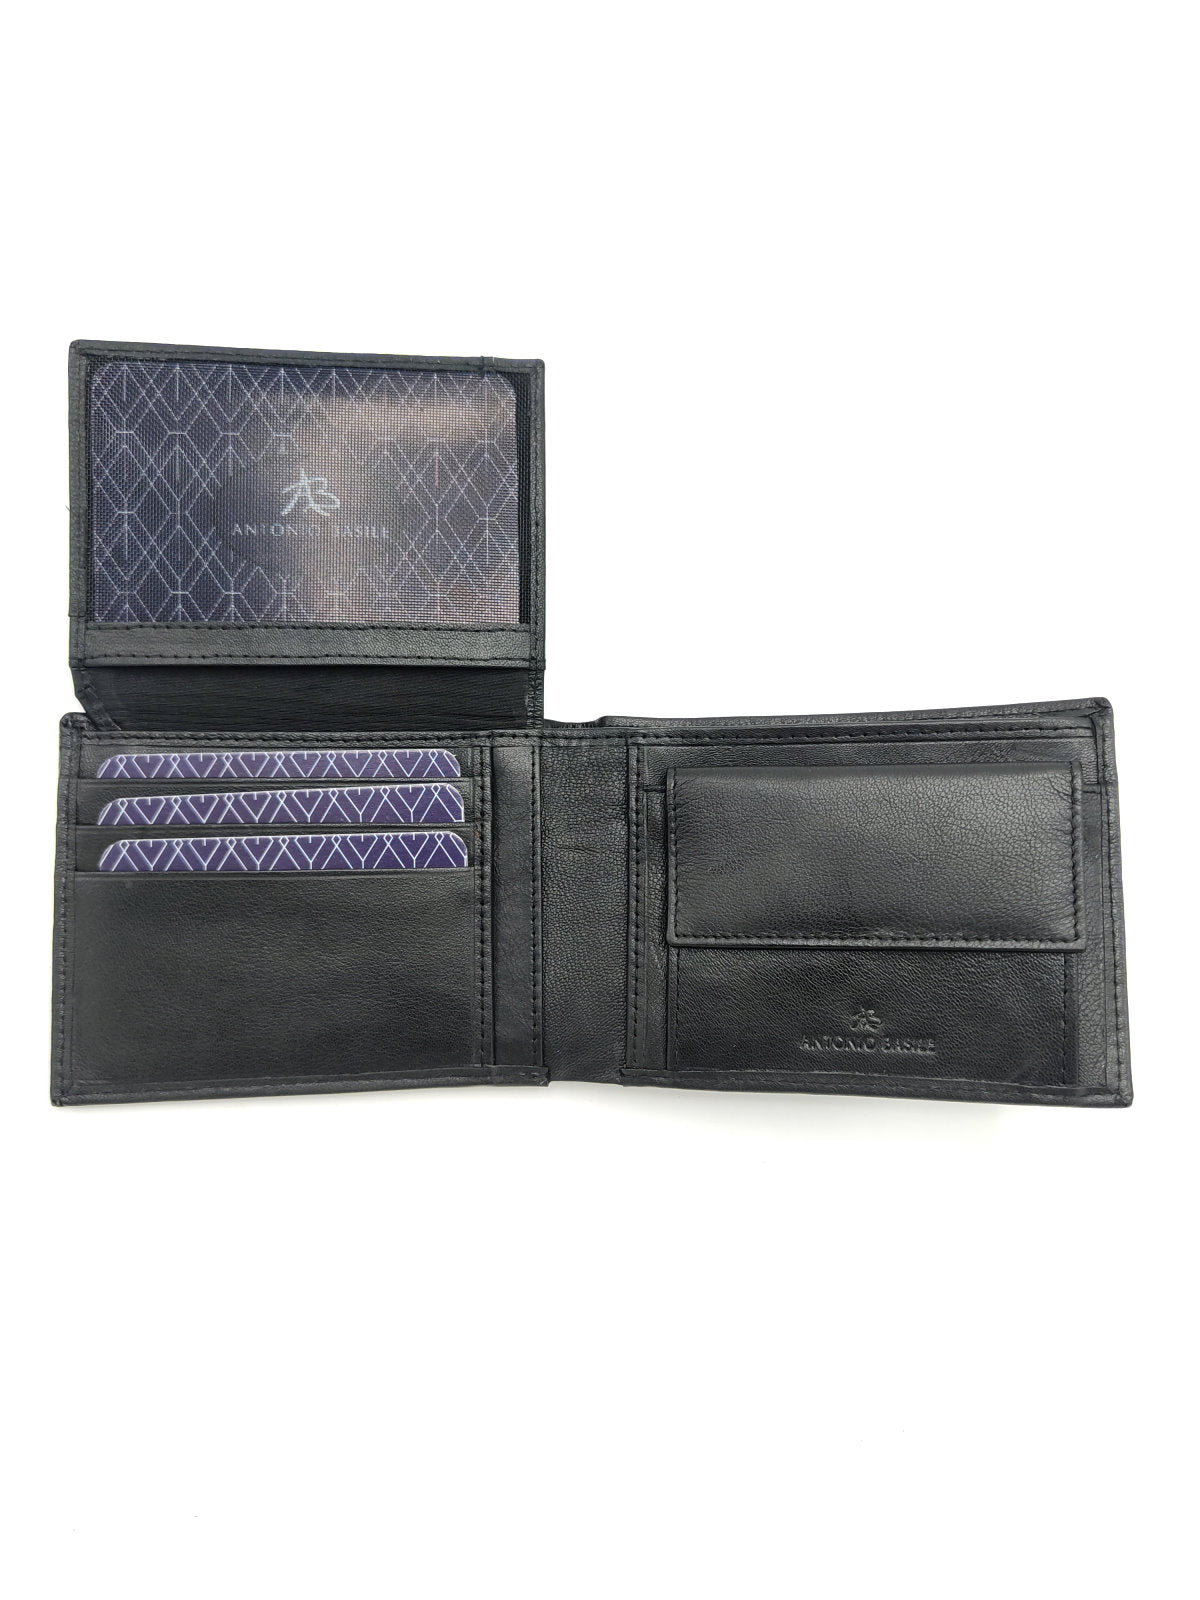 Gift box leather wallet + leather belt, for men, brand Antonio Basile, art. 1123-CINT.422